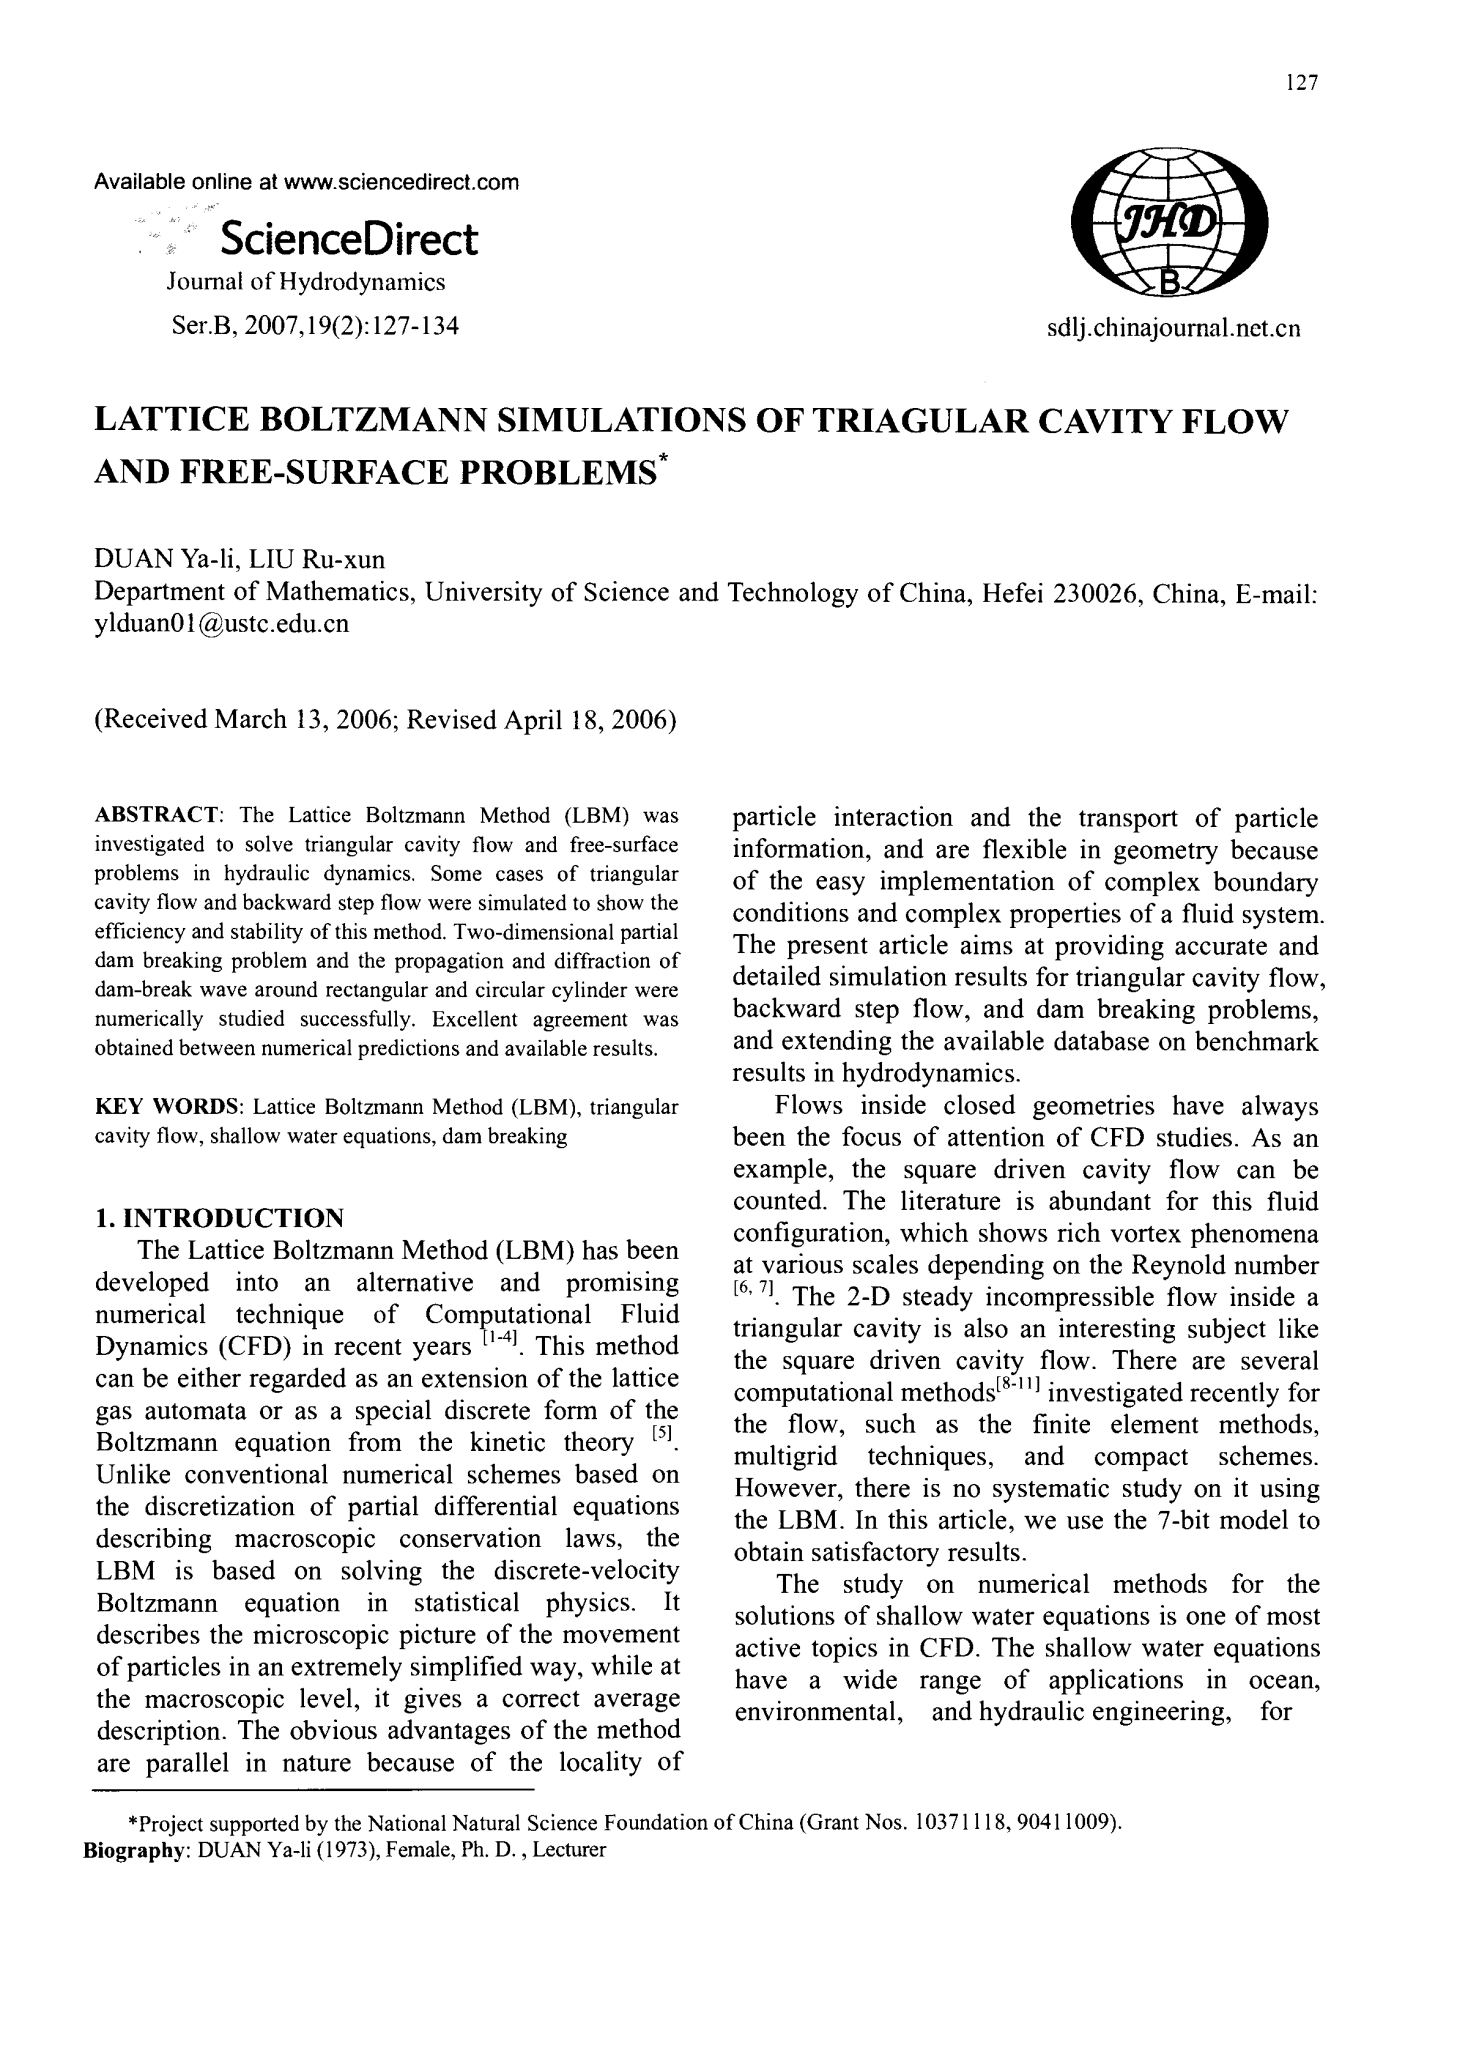 LATTICE BOLTZMANN SIMULATIONS OF TRIAGULAR CAVITY FLOW AND FREE-SURFACE PROBLEMS